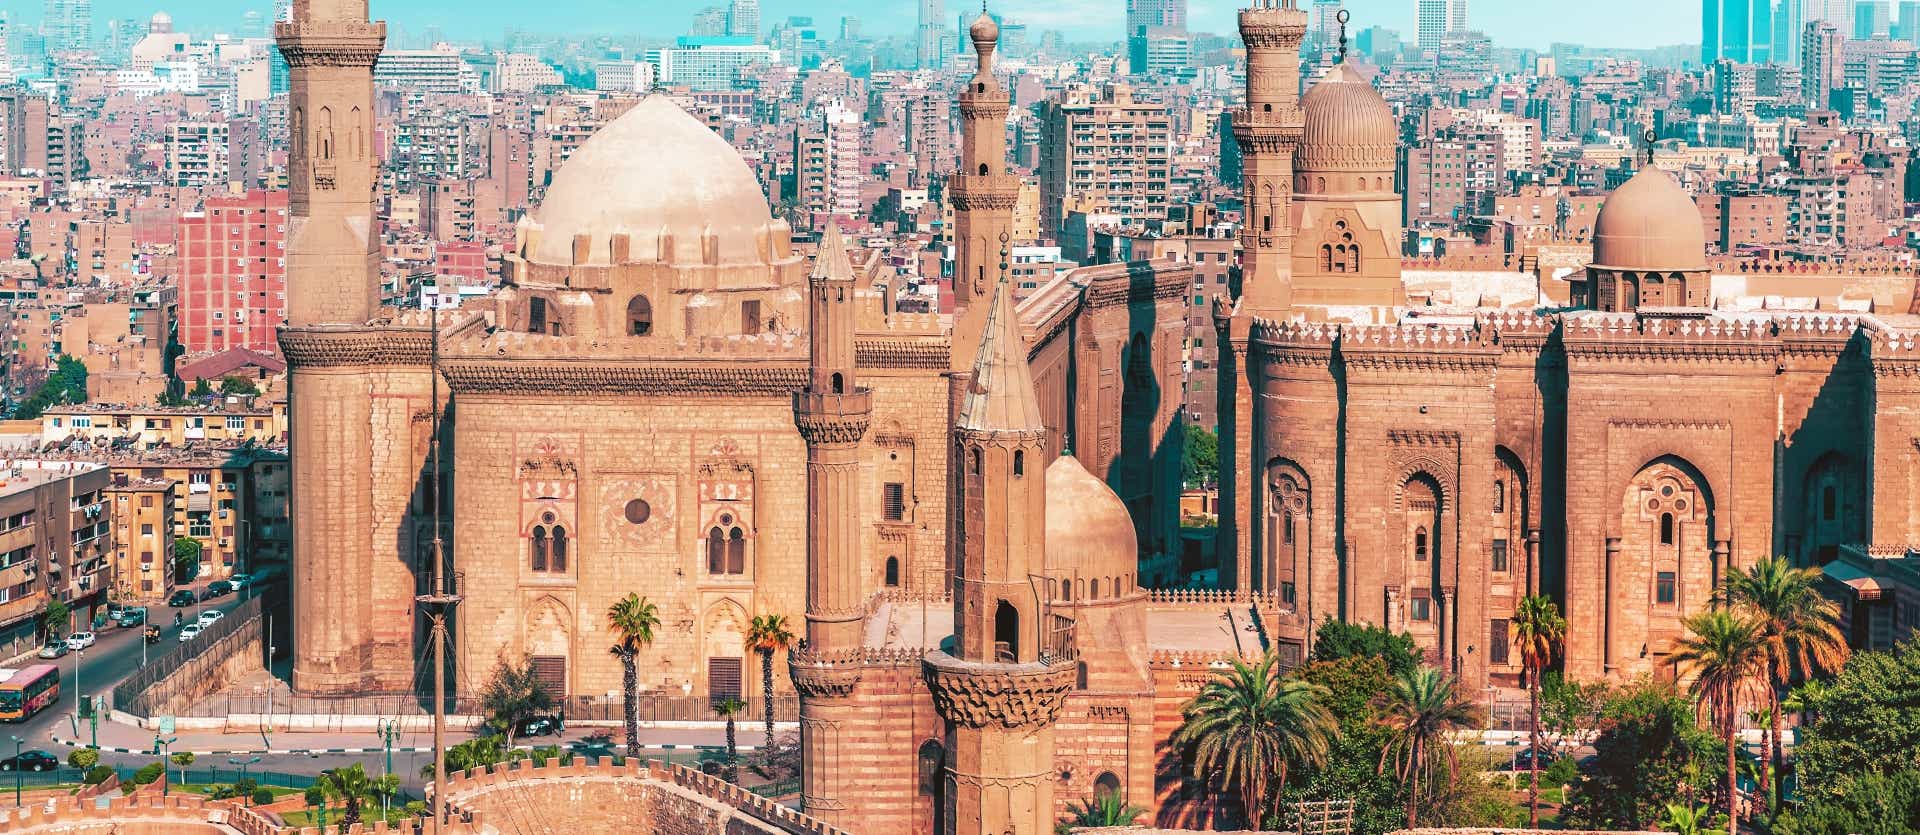 Sultan Hassan Mosque <span class="iconos separador"></span> Cairo <span class="iconos separador"></span> Egypt